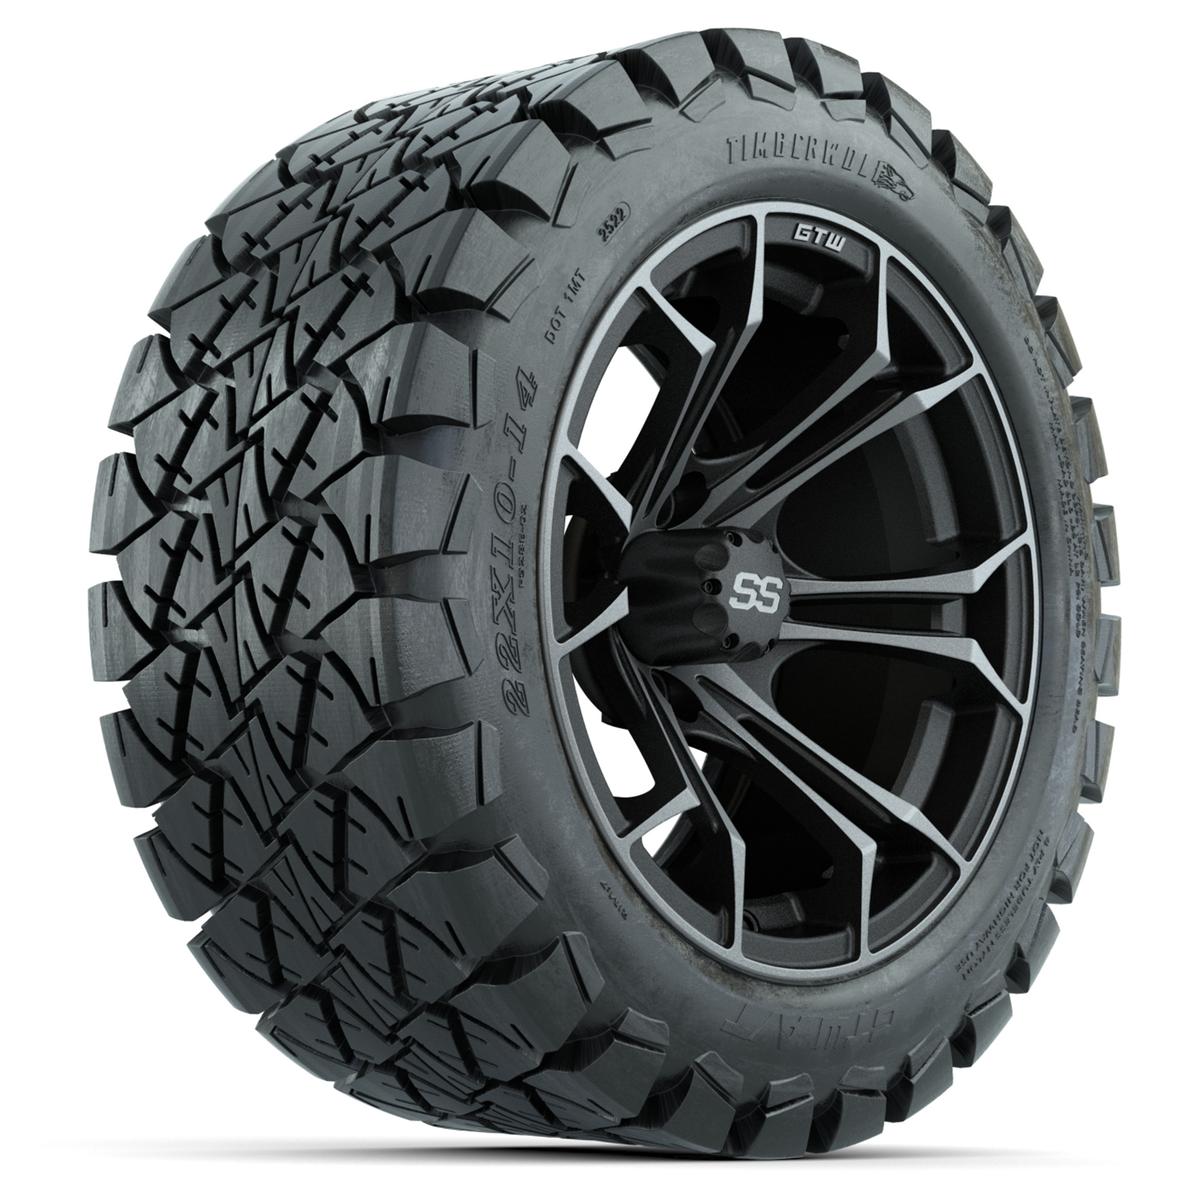 GTW Spyder Matte Grey 14 in Wheels with 22x10-14 GTW Timberwolf All-Terrain Tires – Full Set